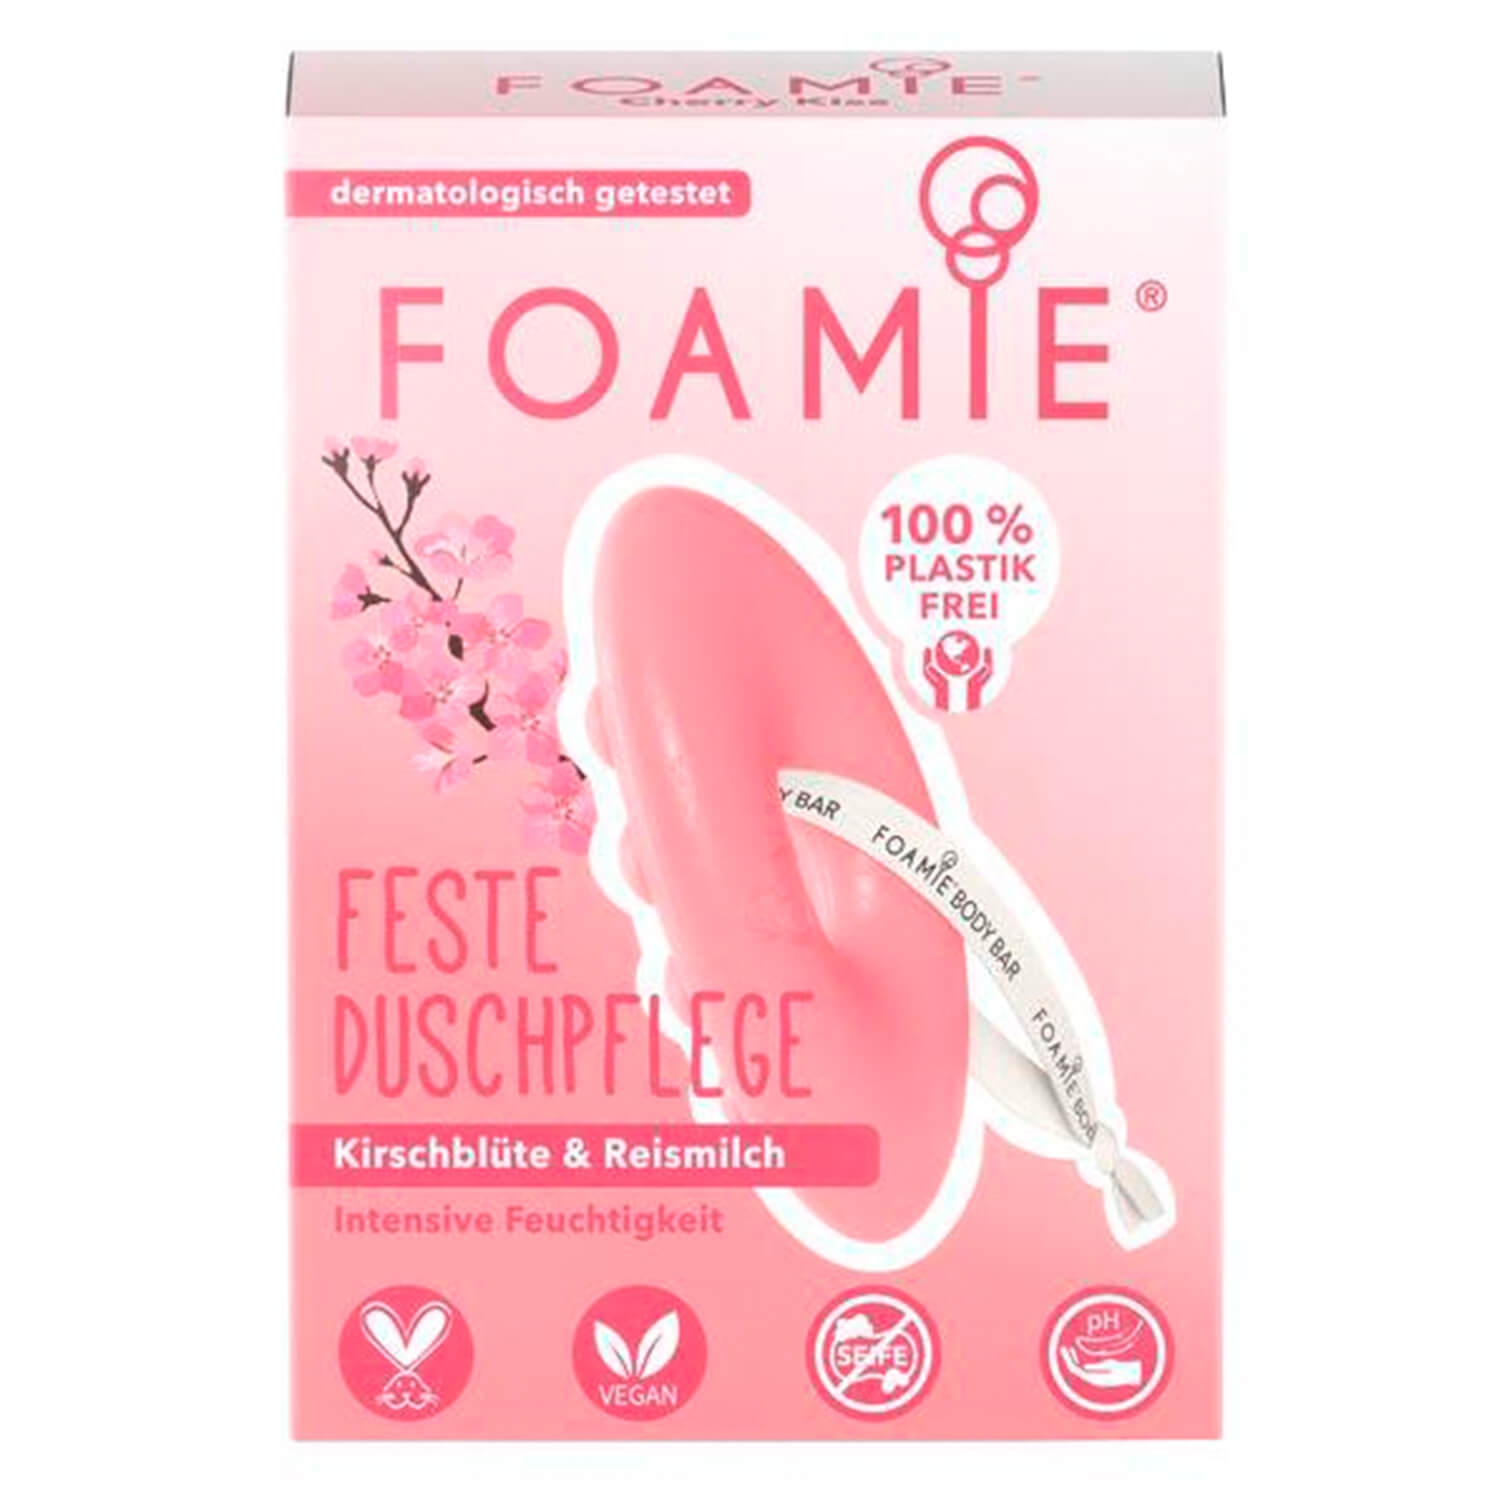 Product image from Foamie - Feste Duschpflege Cherry Kiss